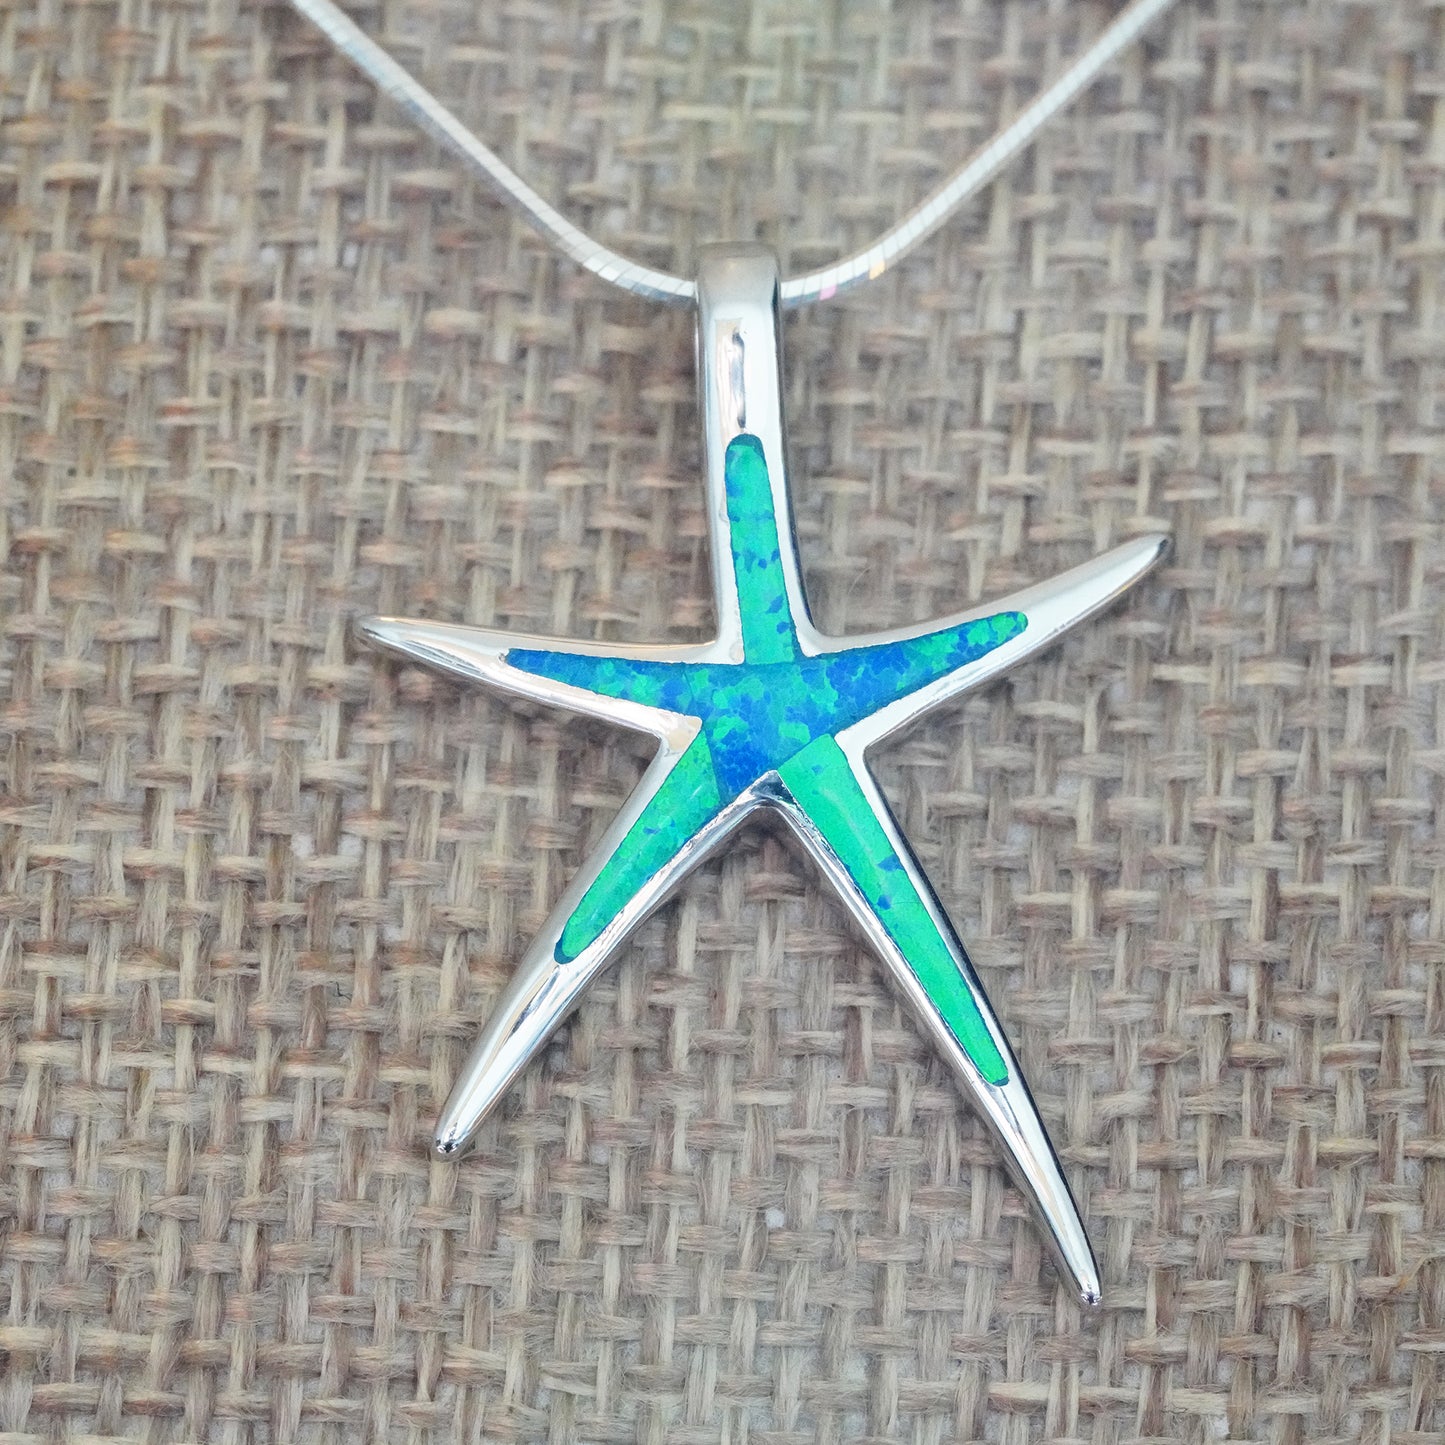 Opal Starfish Pendant